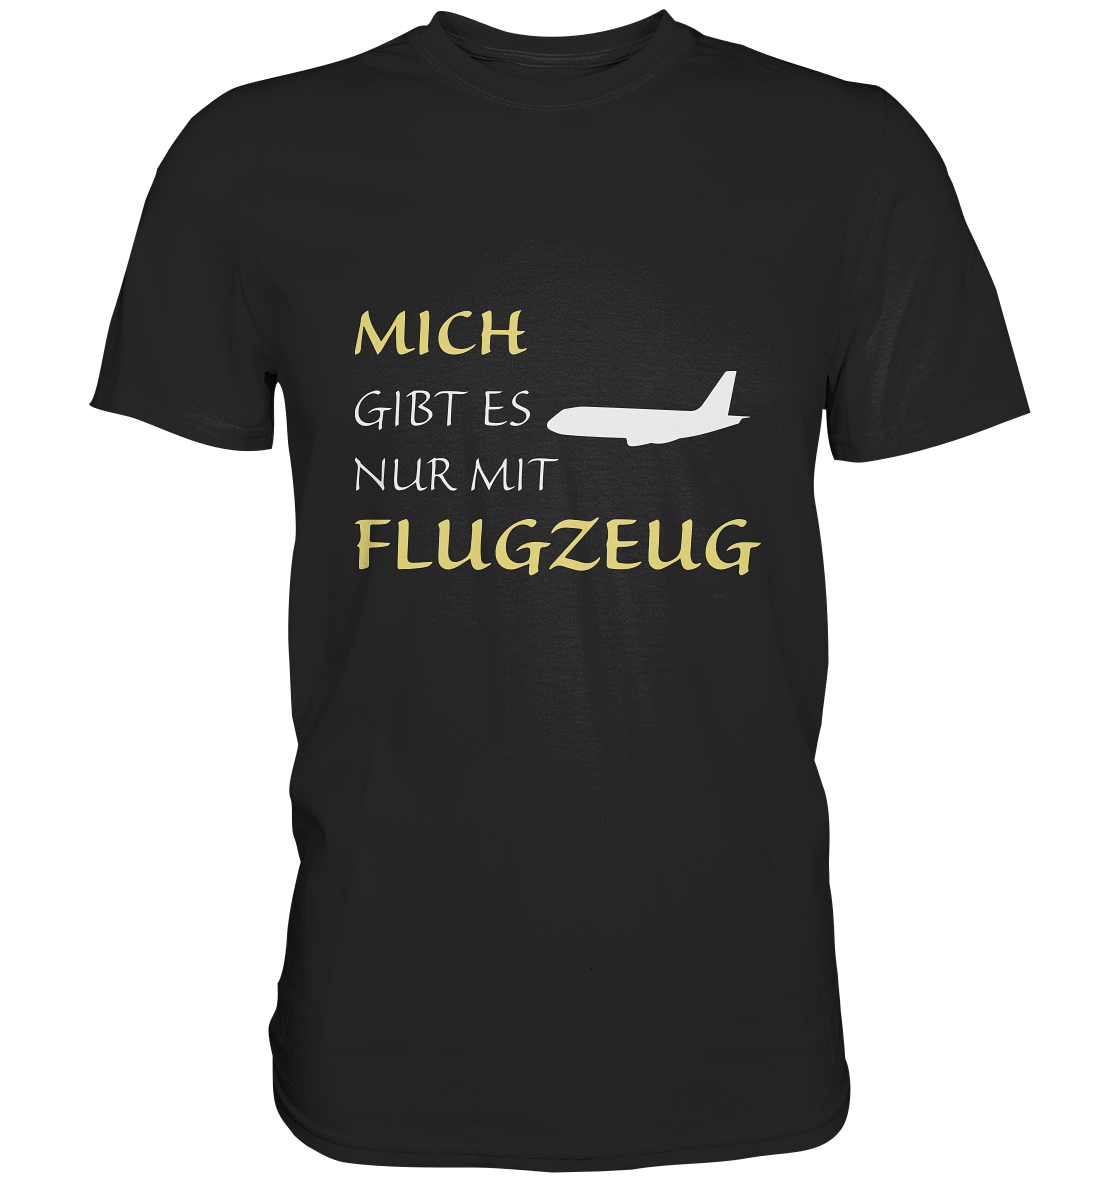 NUR MIT FLUGZEUG - Classic Shirt